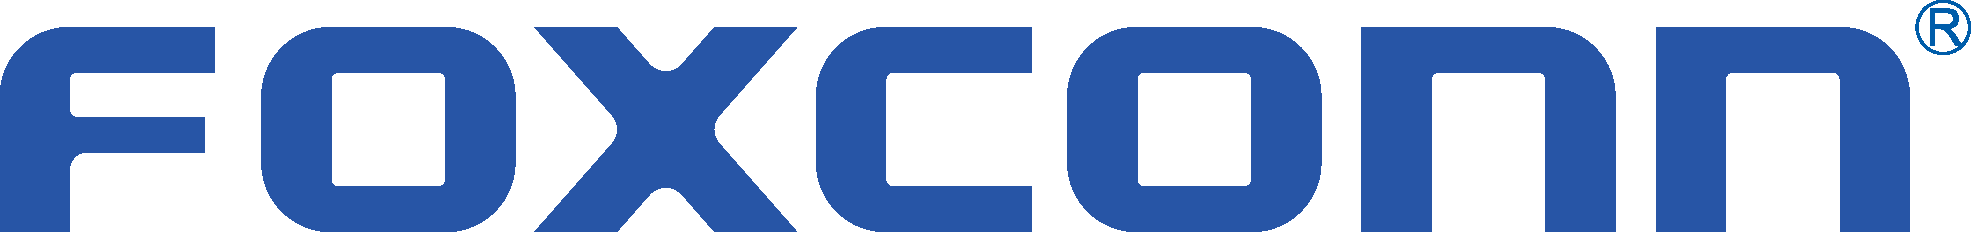 Foxconn Logo - Foxconn Logo Free Vector Download